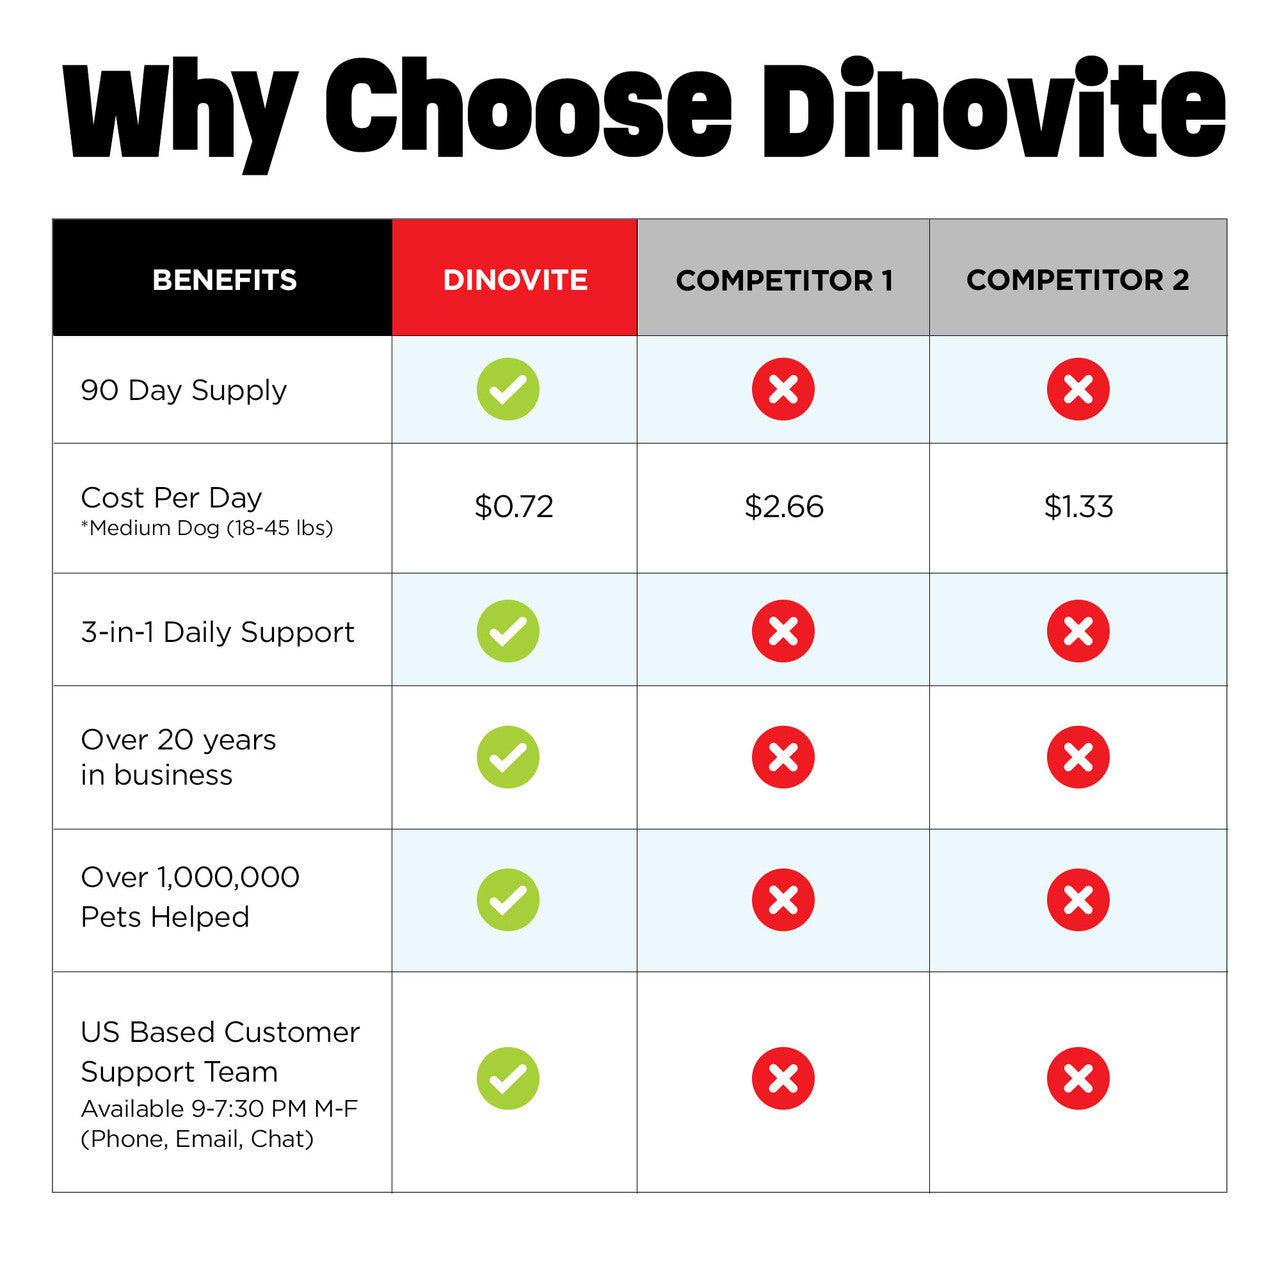 Why Choose Dinovite